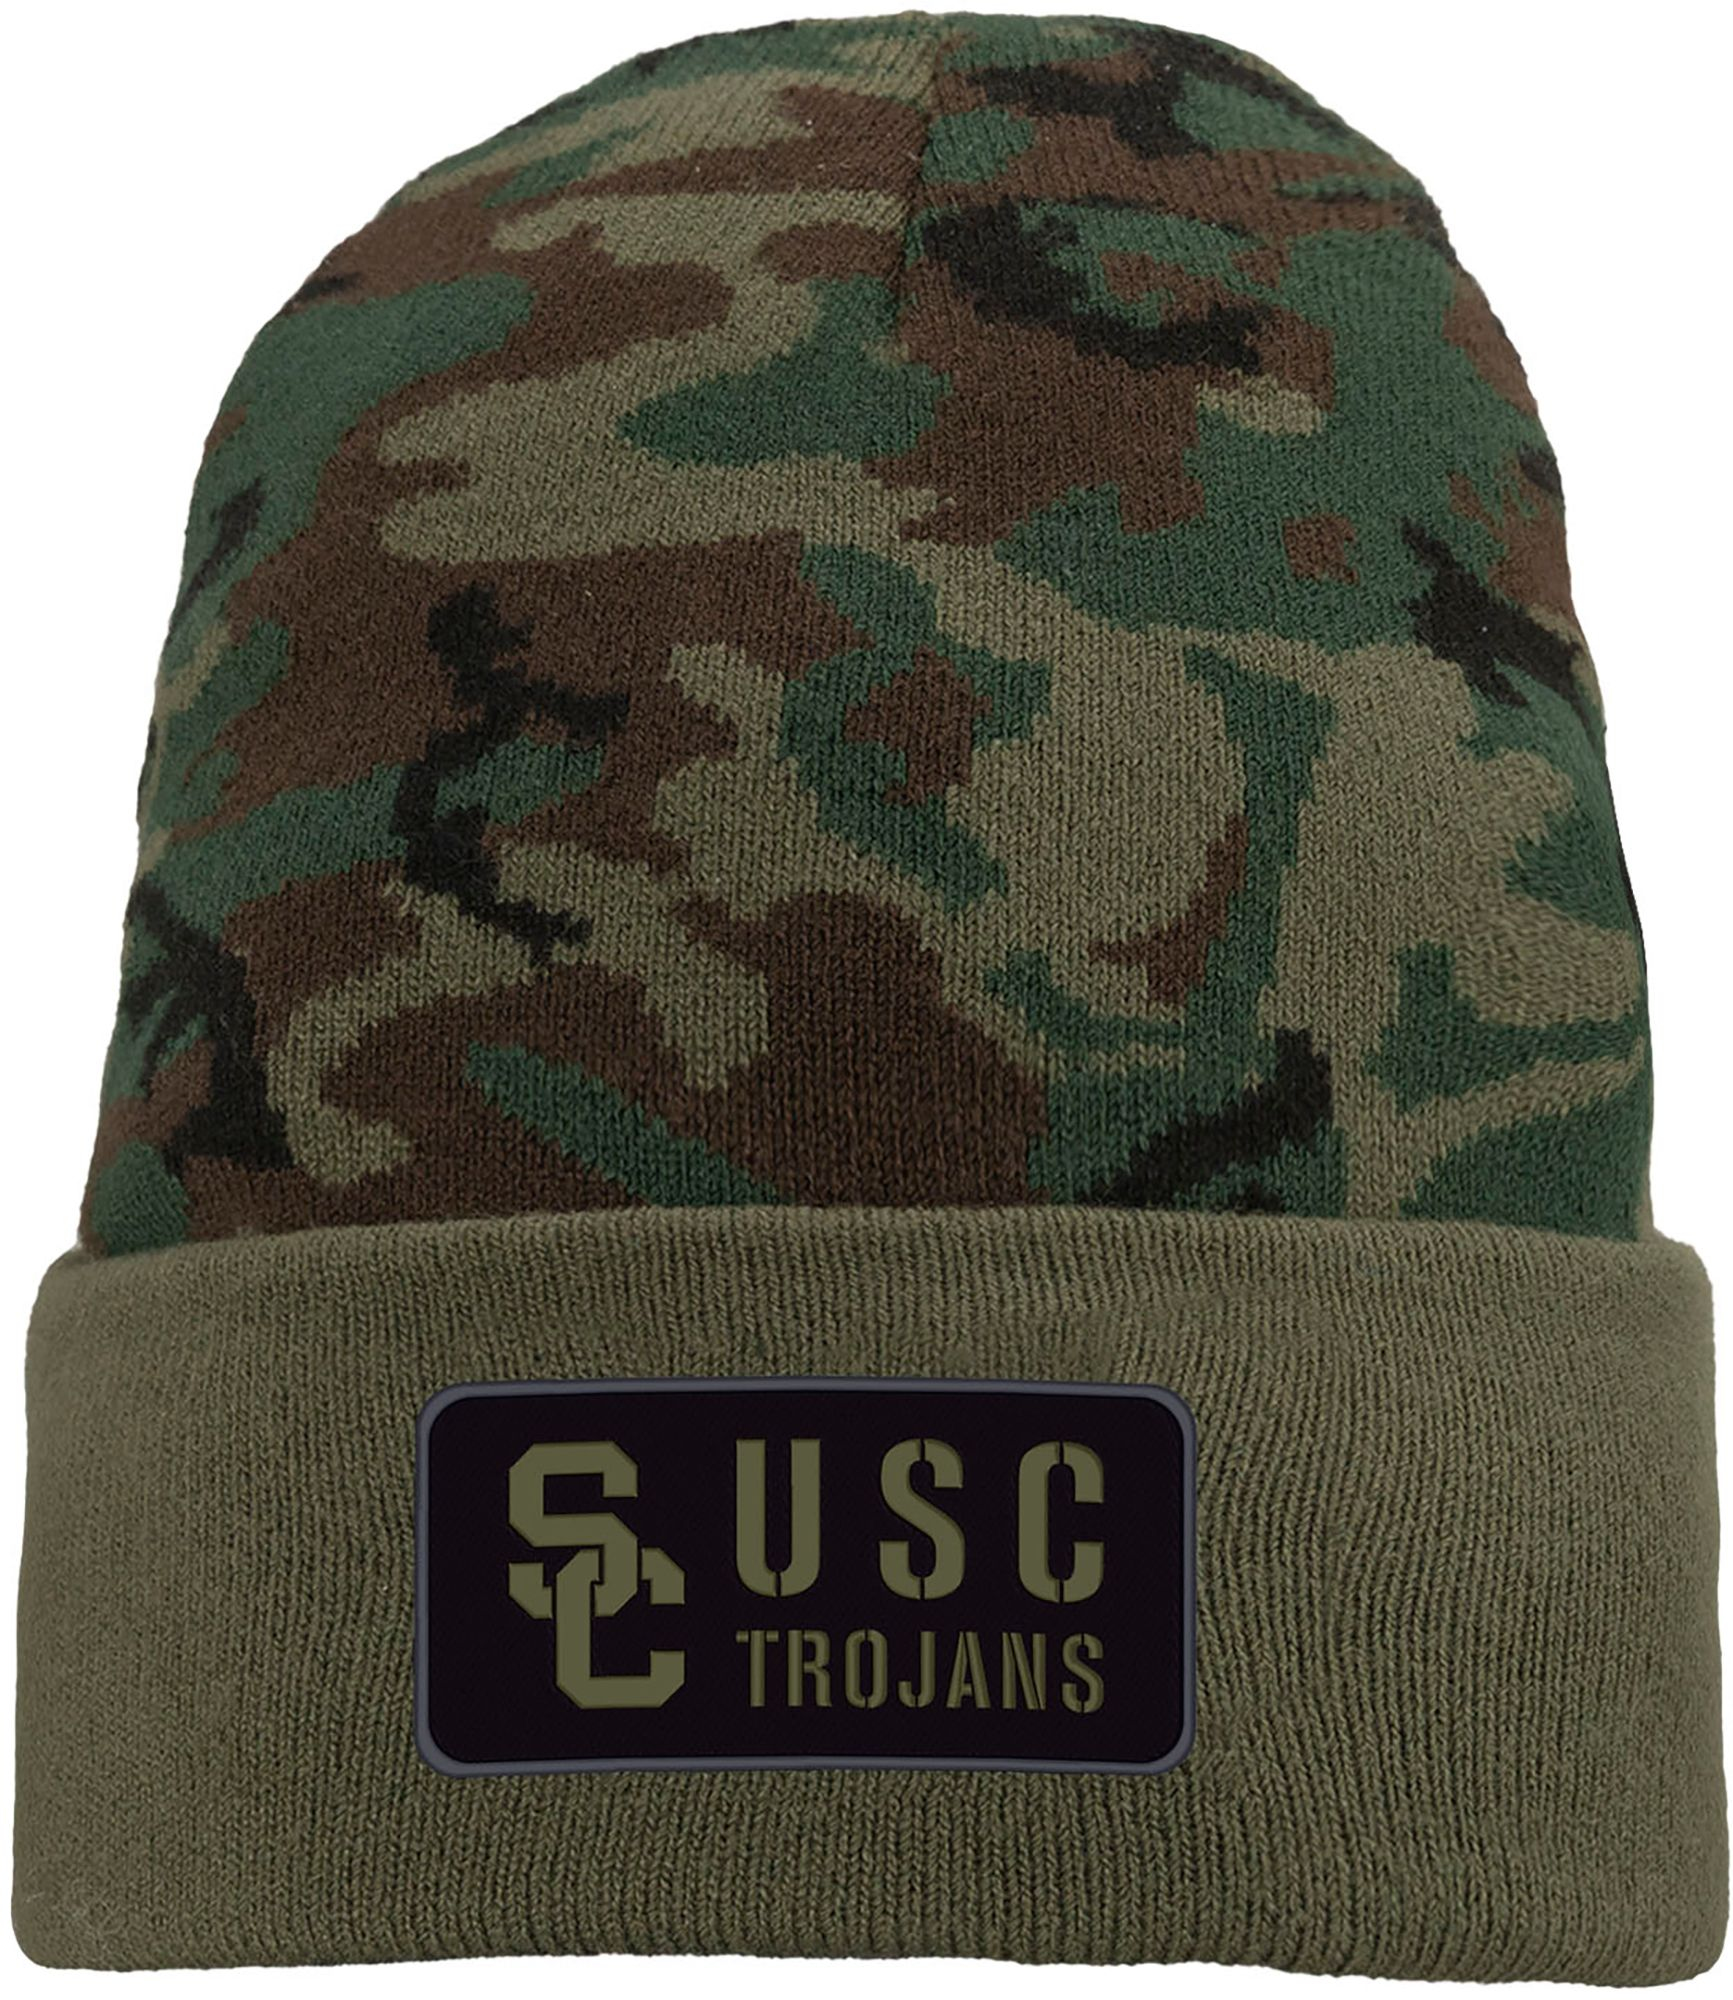 Nike Men's USC Trojans Camo Military Knit Hat, Green